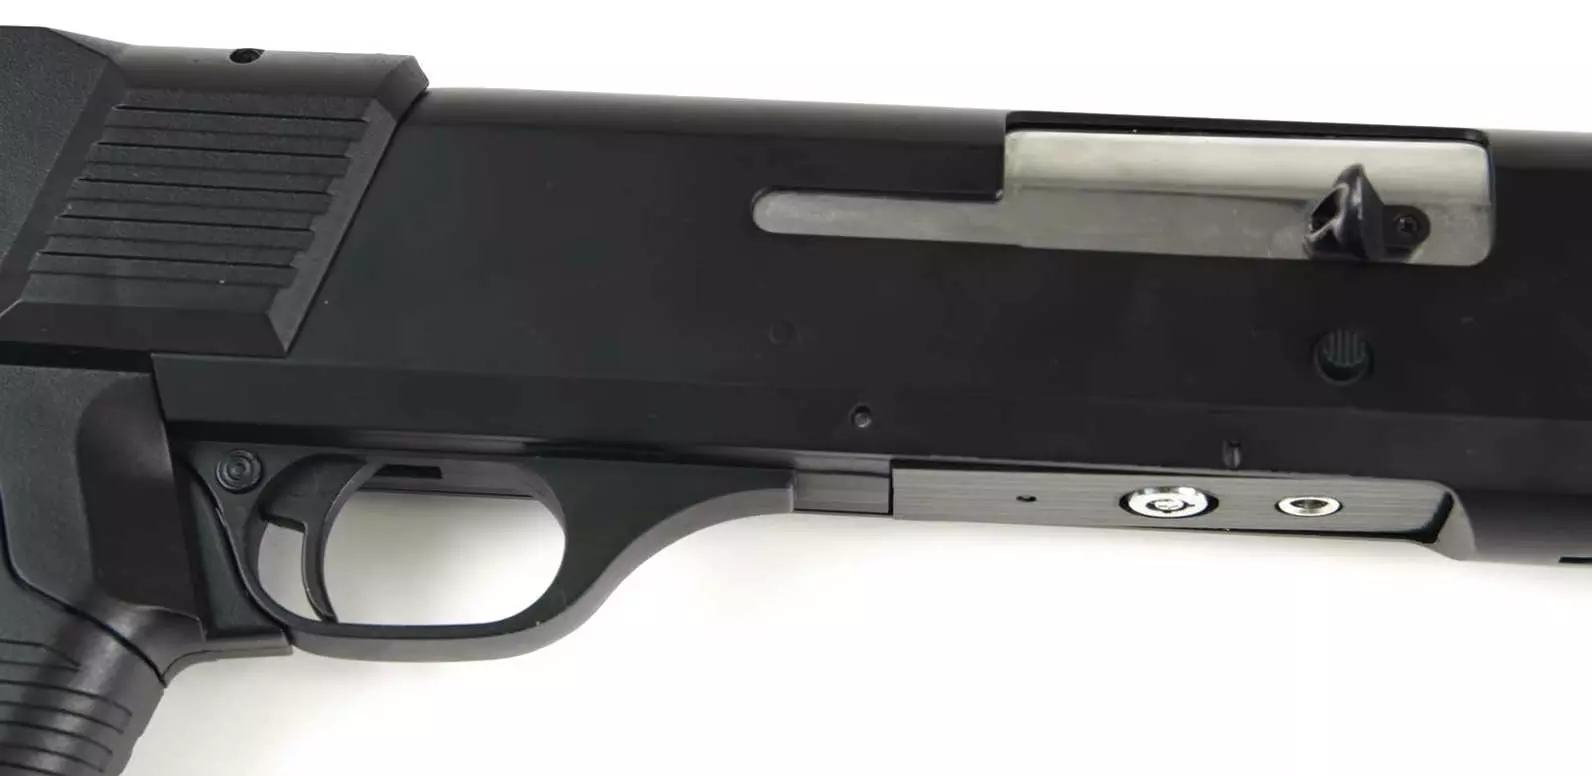 Laser tag shotgun Benelli M3 charging socket